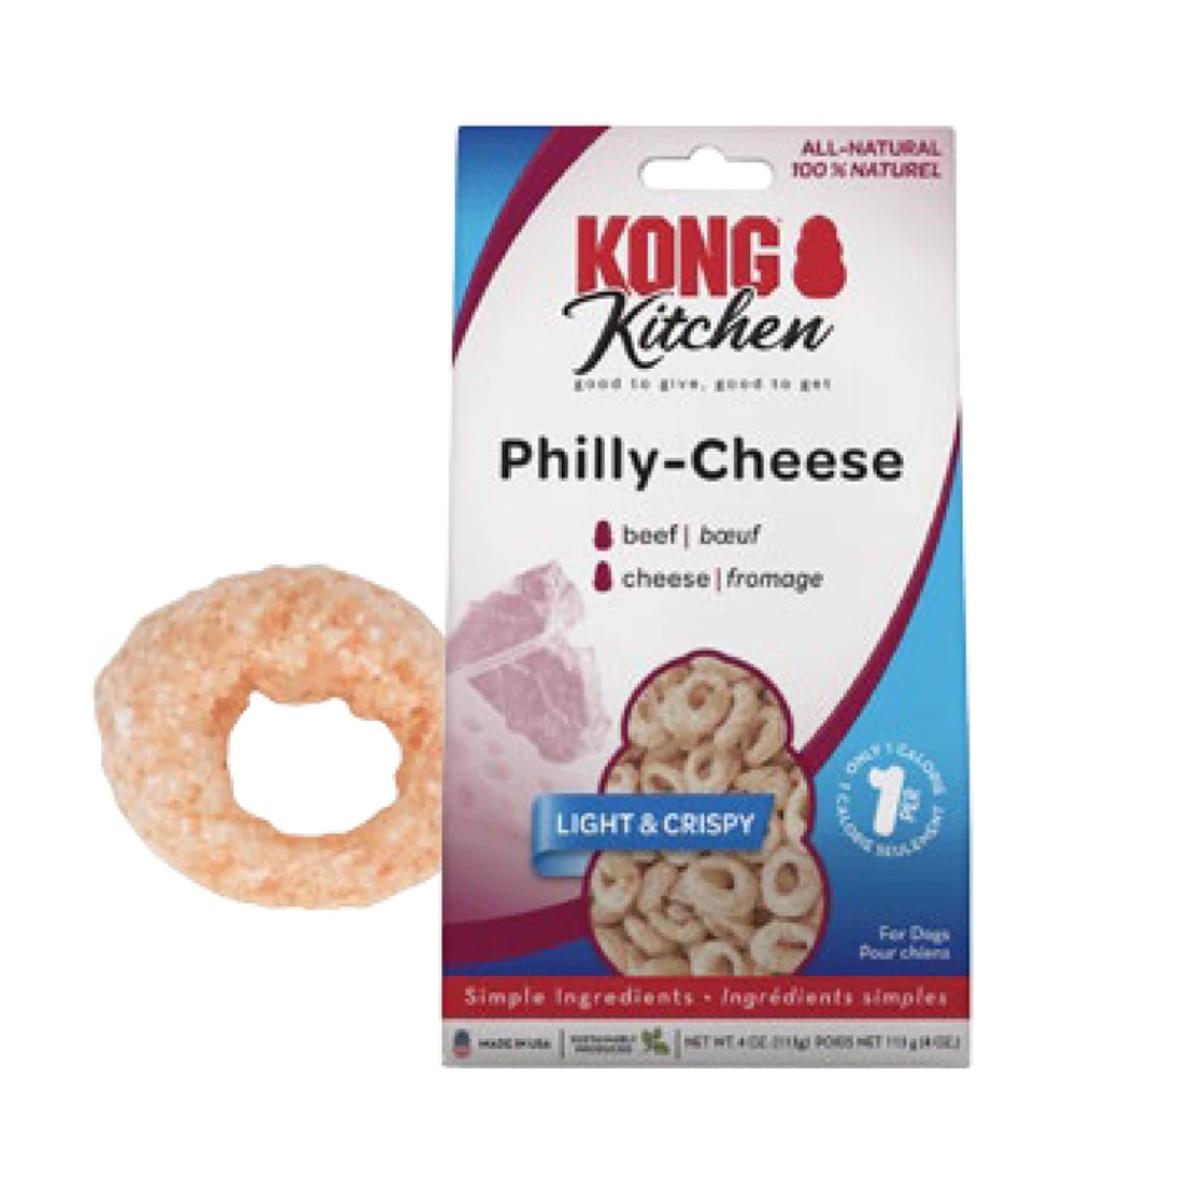 kong-kitchen-light-crispy-dog-treat-philly-cheese